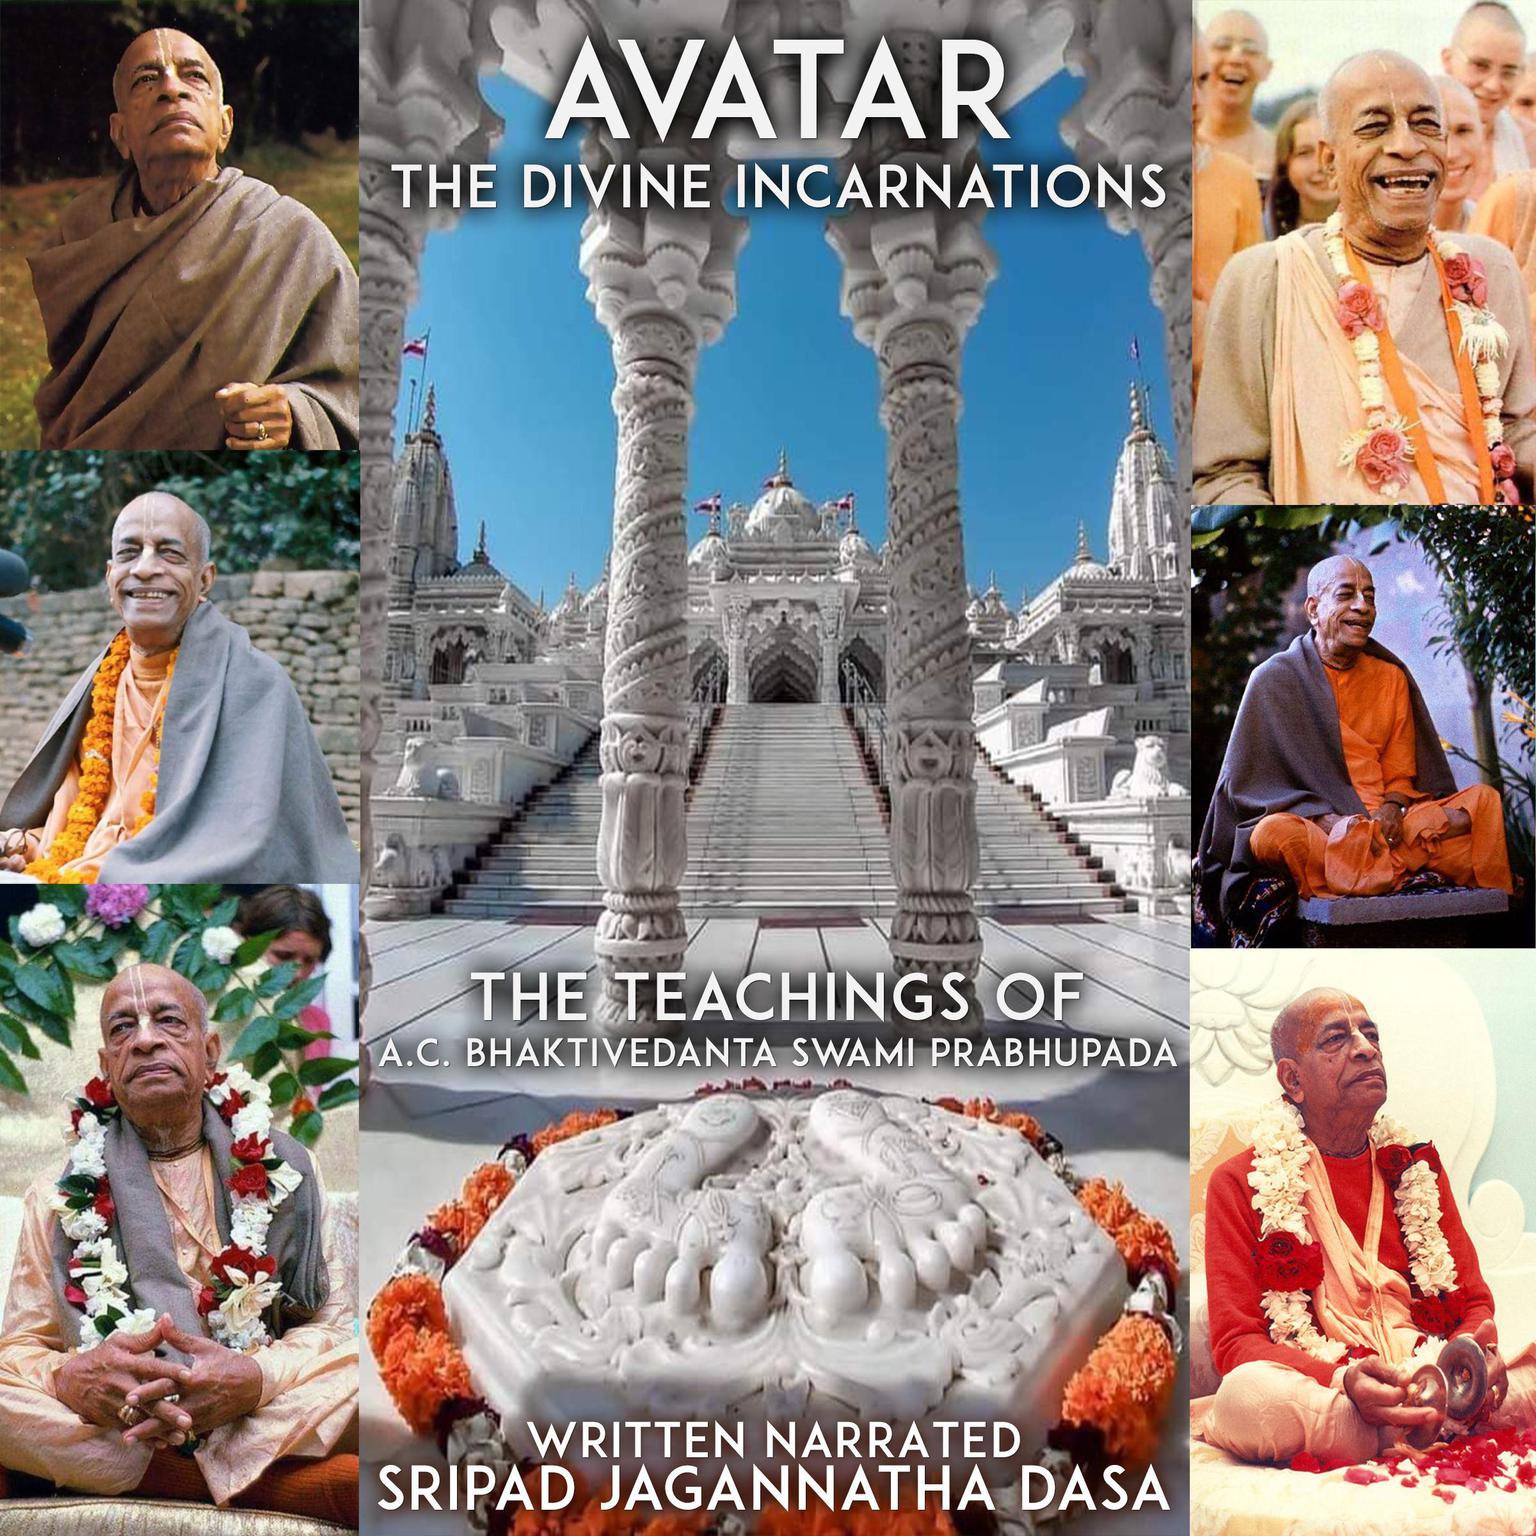 Avatar The Divine Incarnations - The Teachings Of A.C. Bhaktivedanta Swami Prabhupada Audiobook, by Jagannatha Dasa